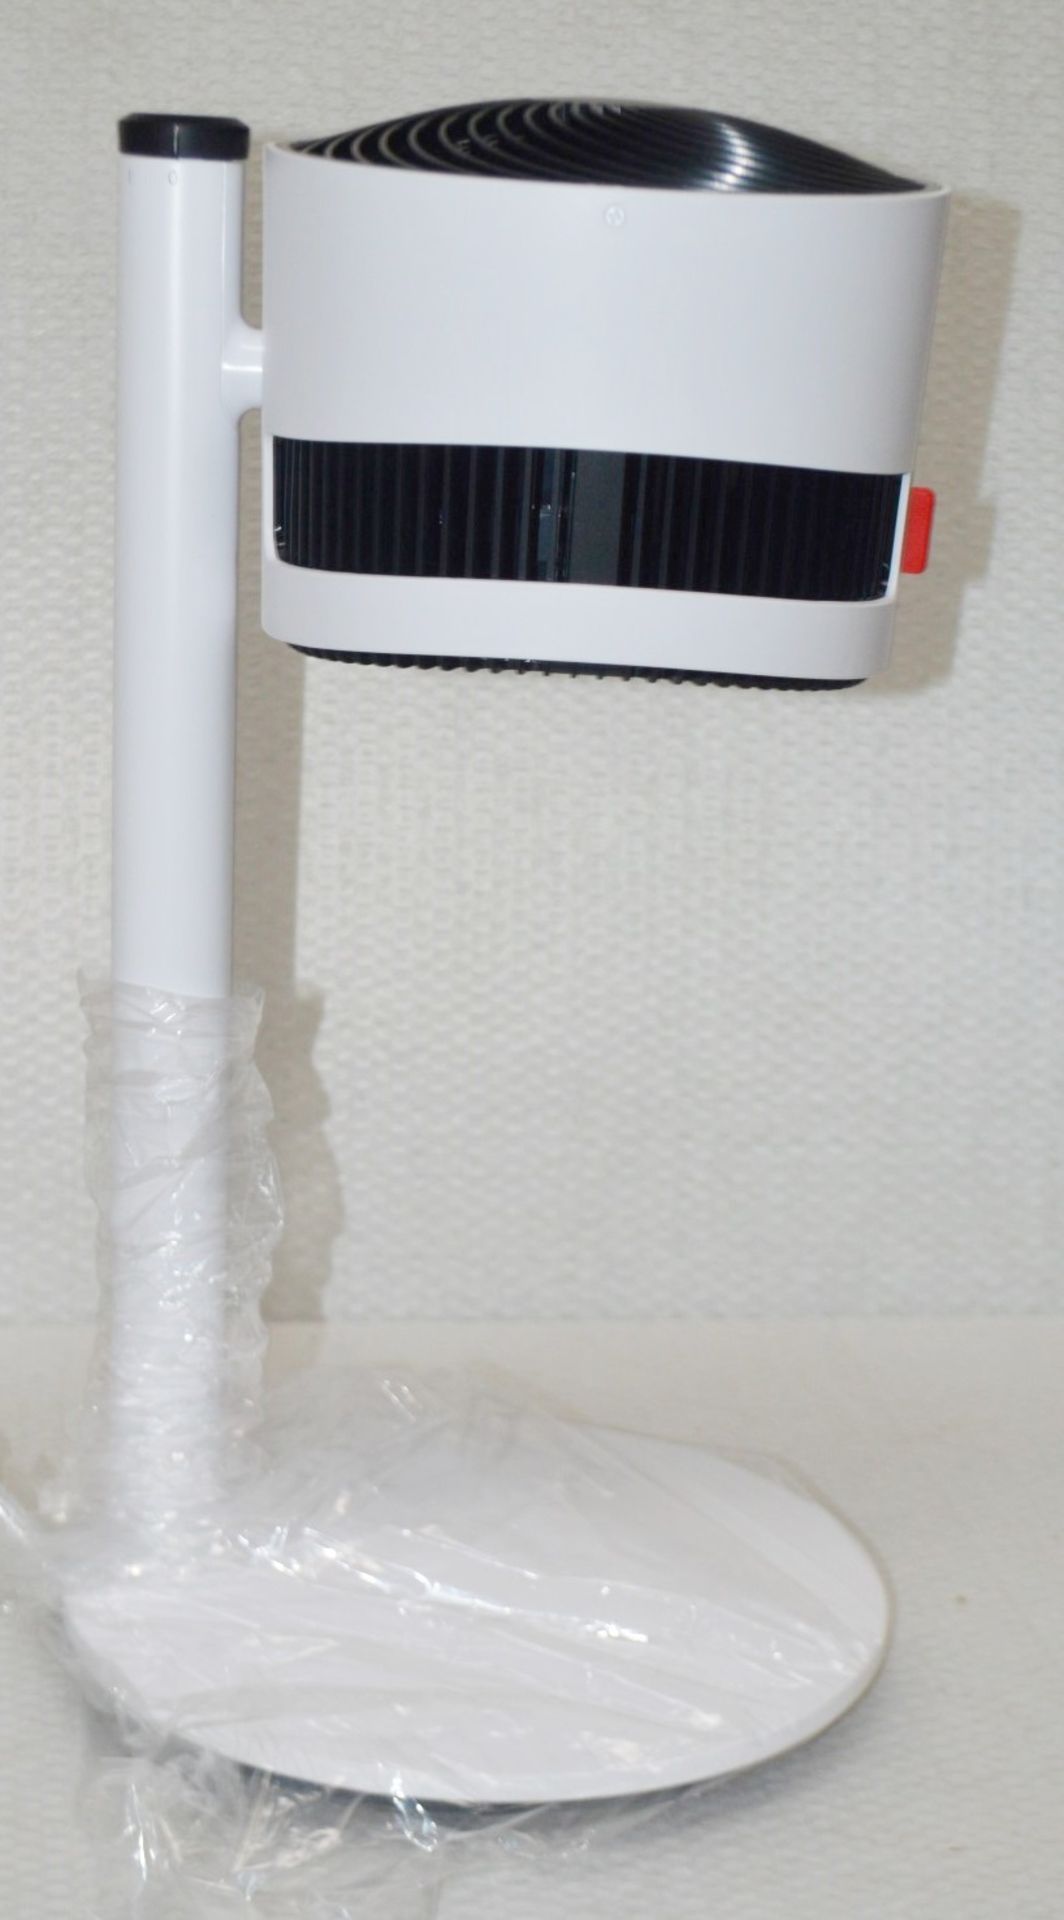 1 x BONECO F120 Air Shower Fan - Dimensions: H54 x W28 x D28cm - UK Plug - Ref: HHW132/NOV21/GITC2 - - Image 3 of 6